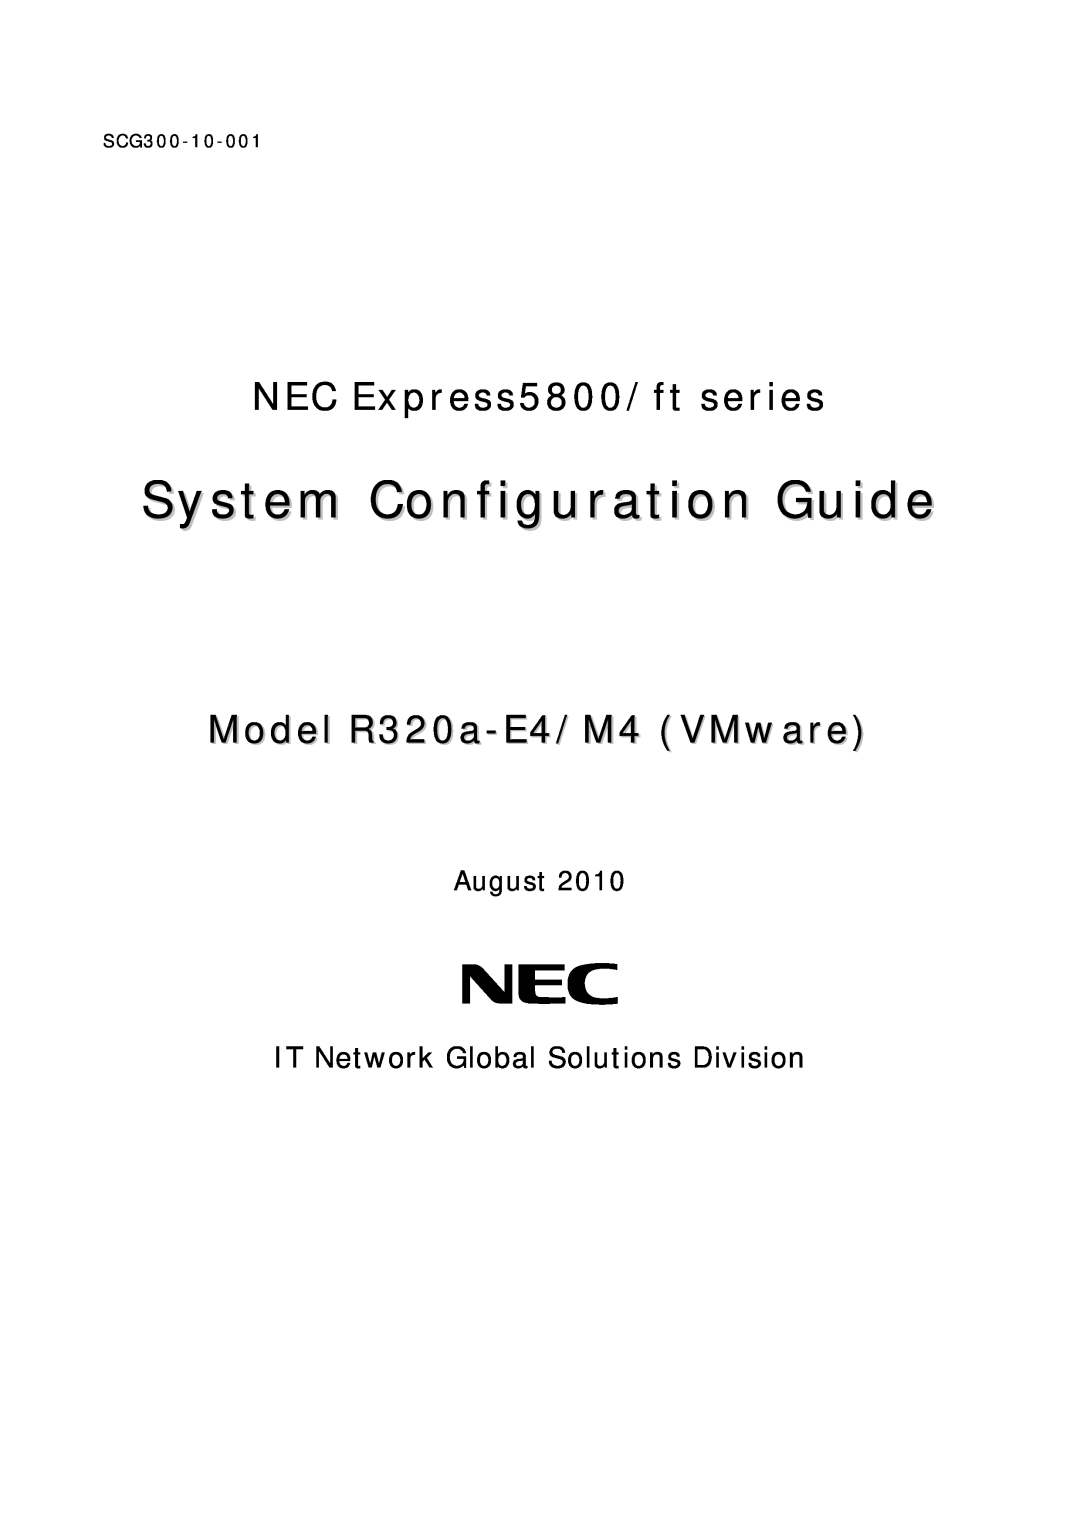 NEC R320A-E4 manual SCG300-10-001, System Configuration Guide, NEC Express5800/ft series, Model R320a-E4/M4 VMware, August 